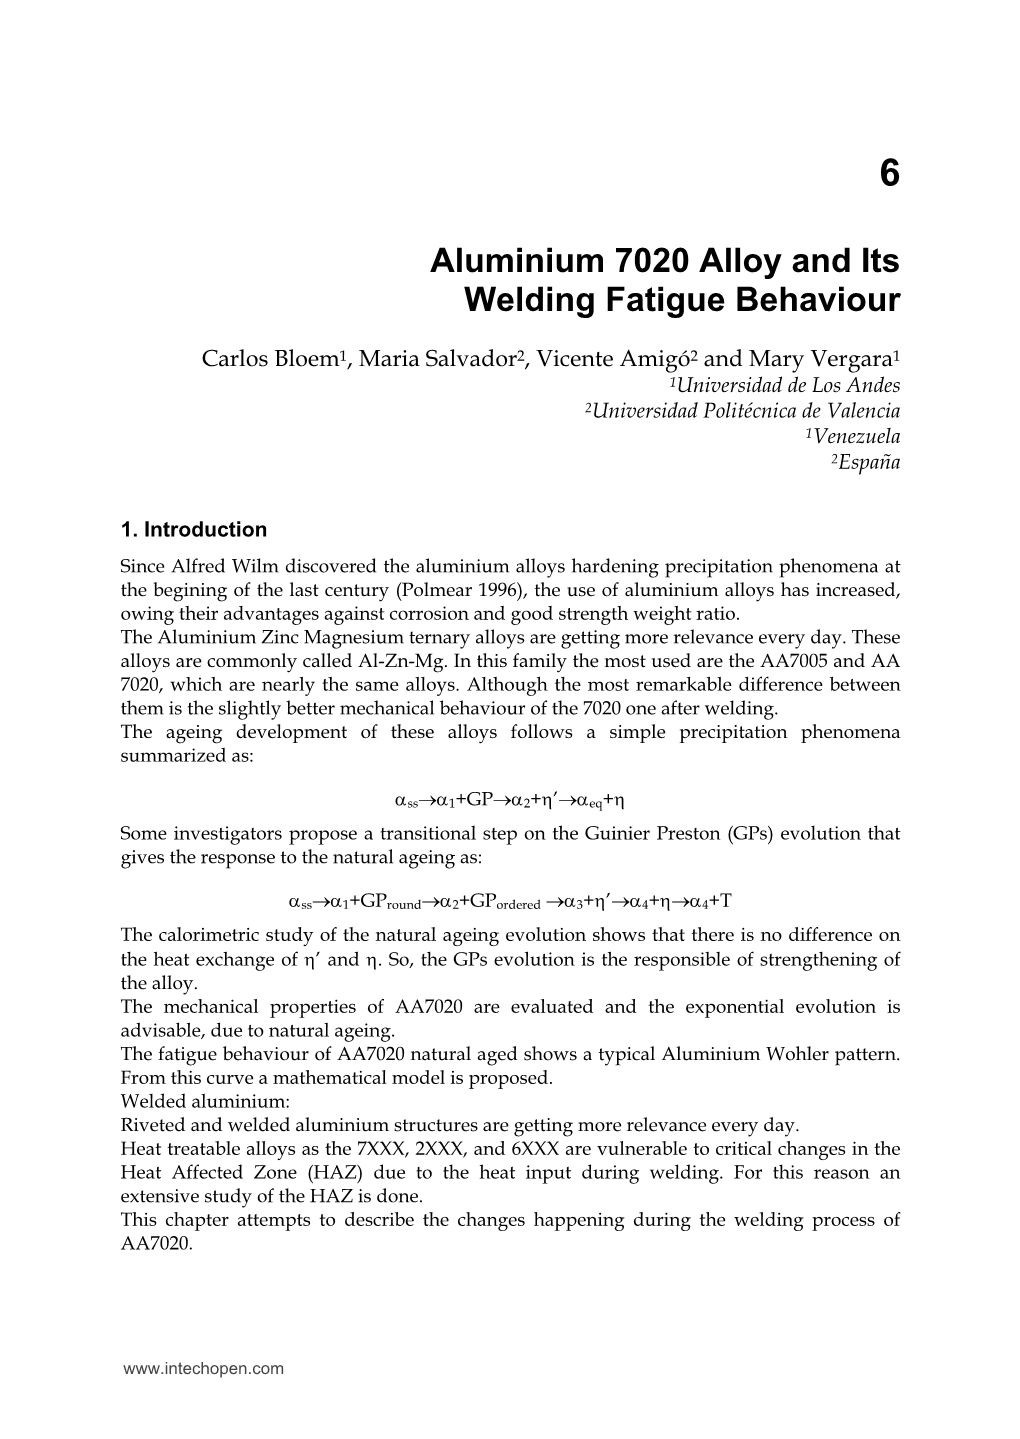 Aluminium 7020 Alloy and Its Welding Fatigue Behaviour